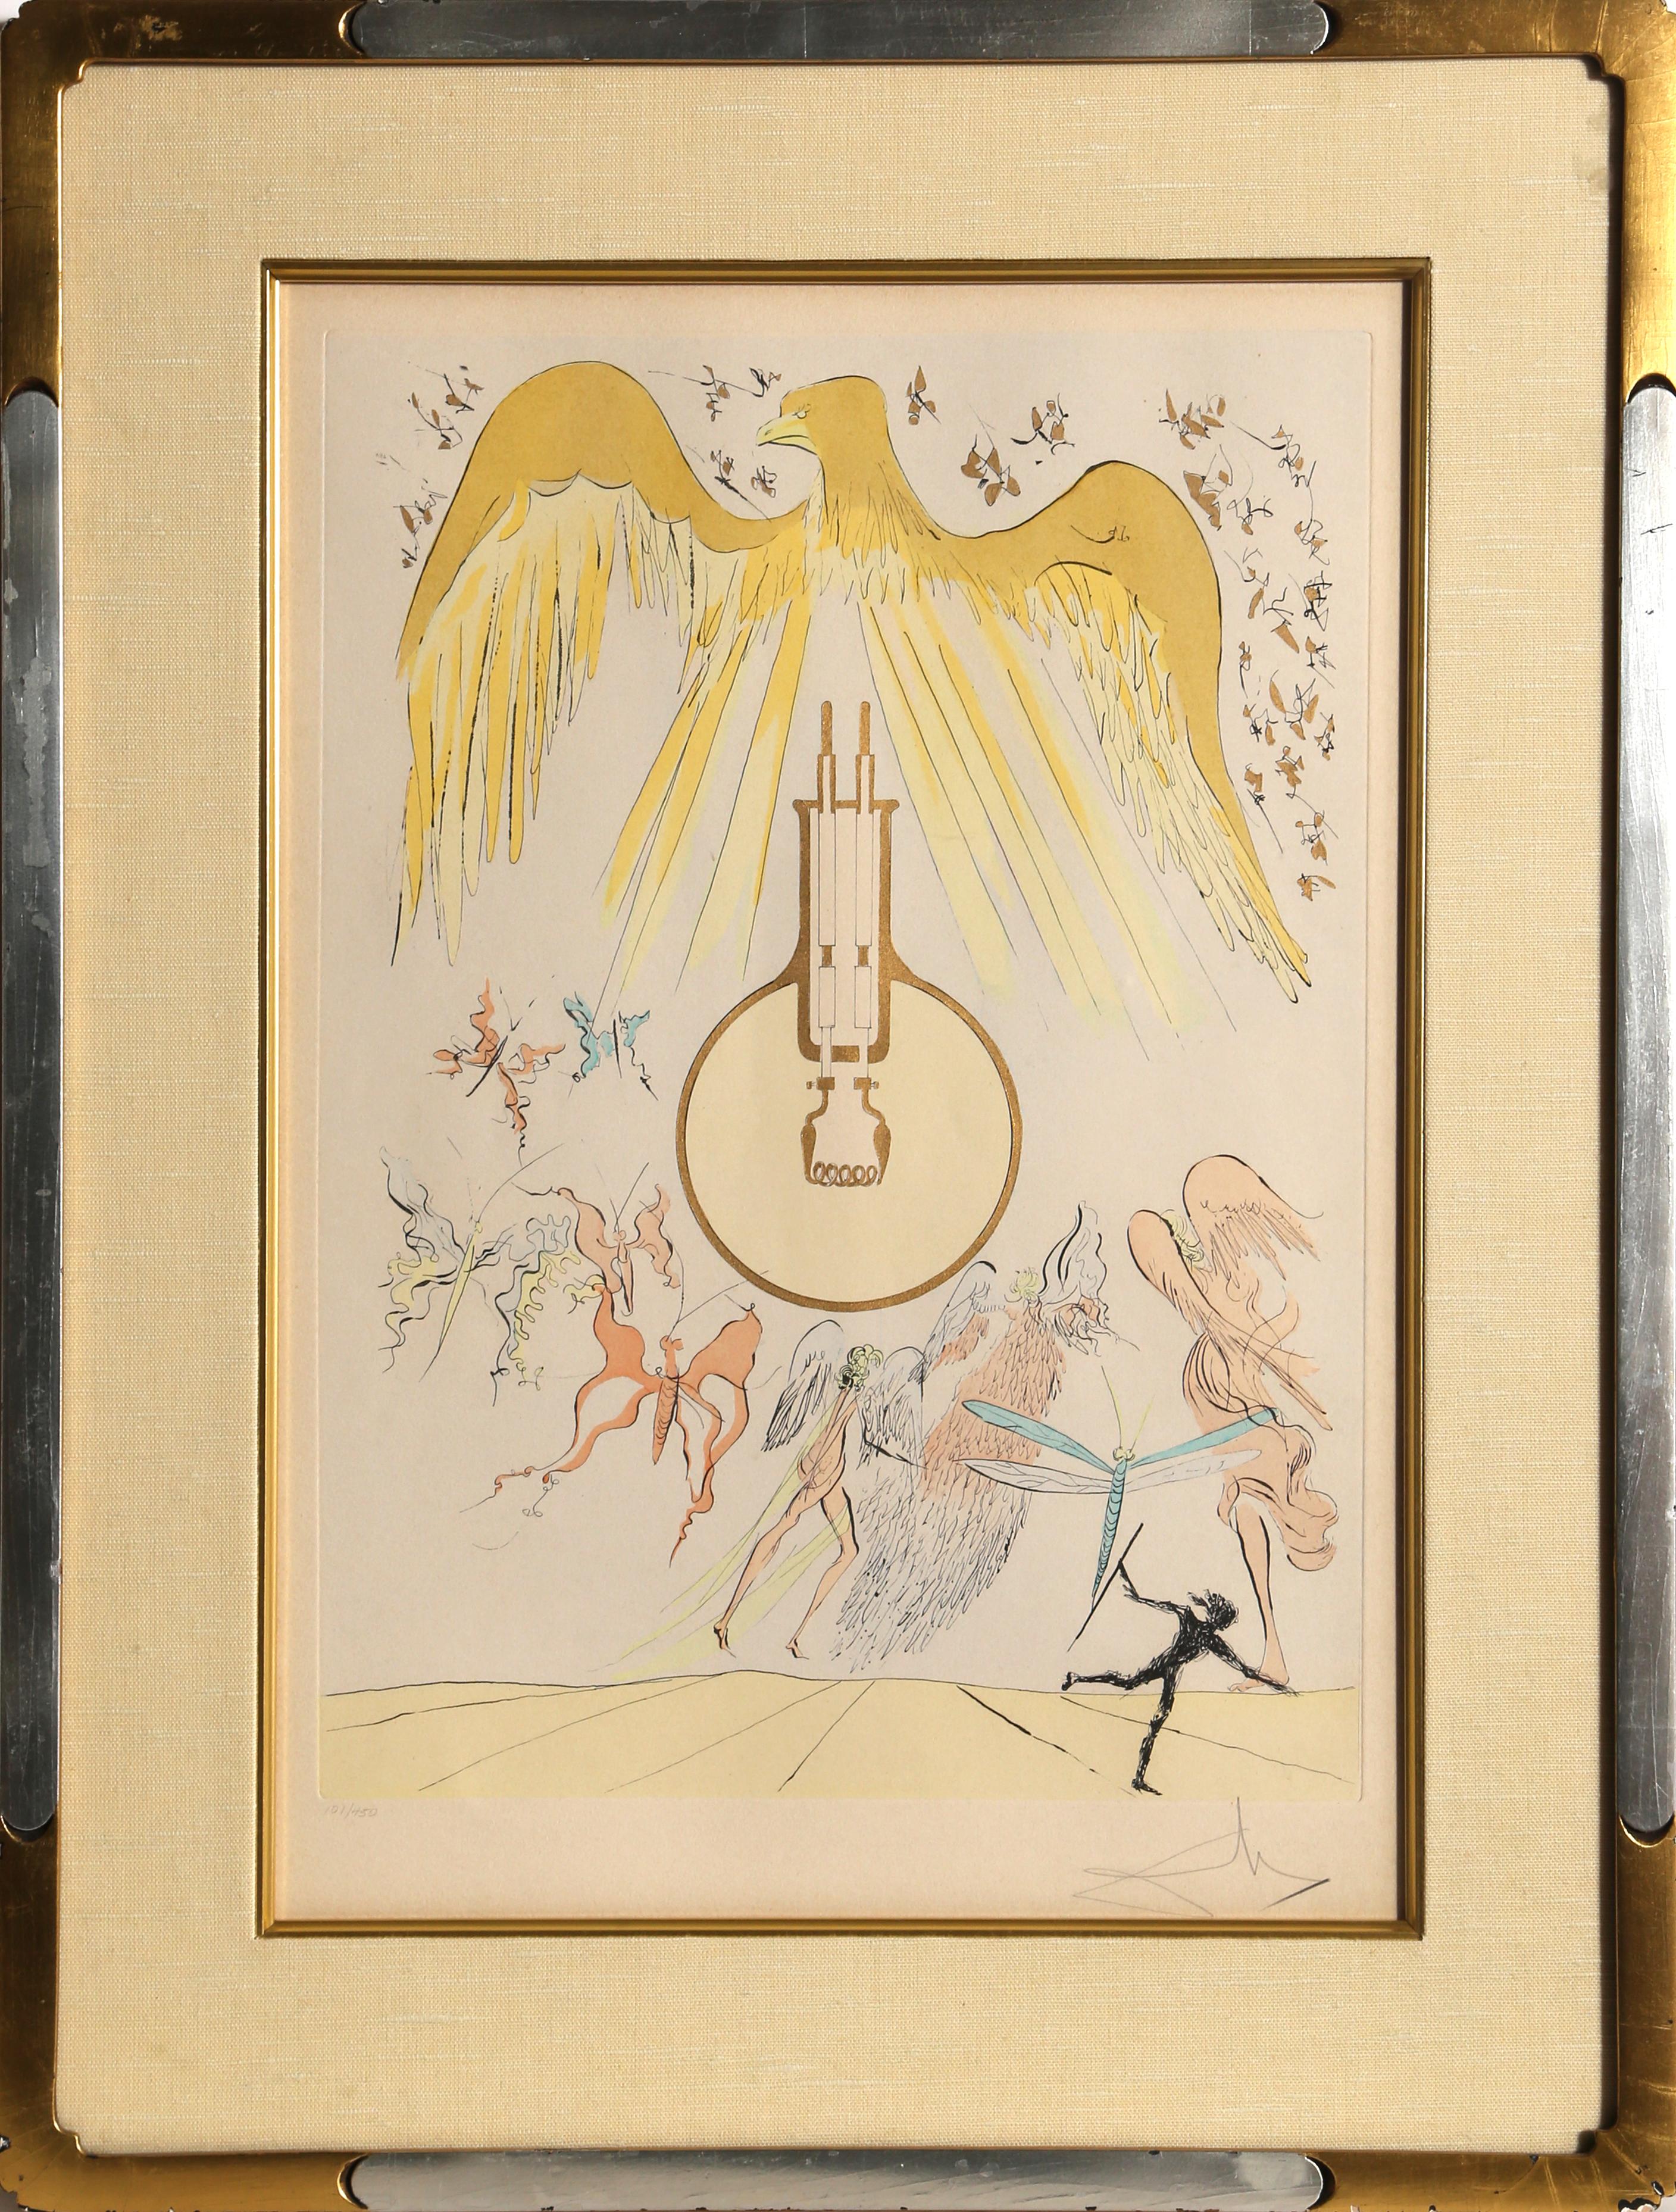 L'Ampoule Incandesence from Homage to Leonardo Da Vinci - Print by Salvador Dalí